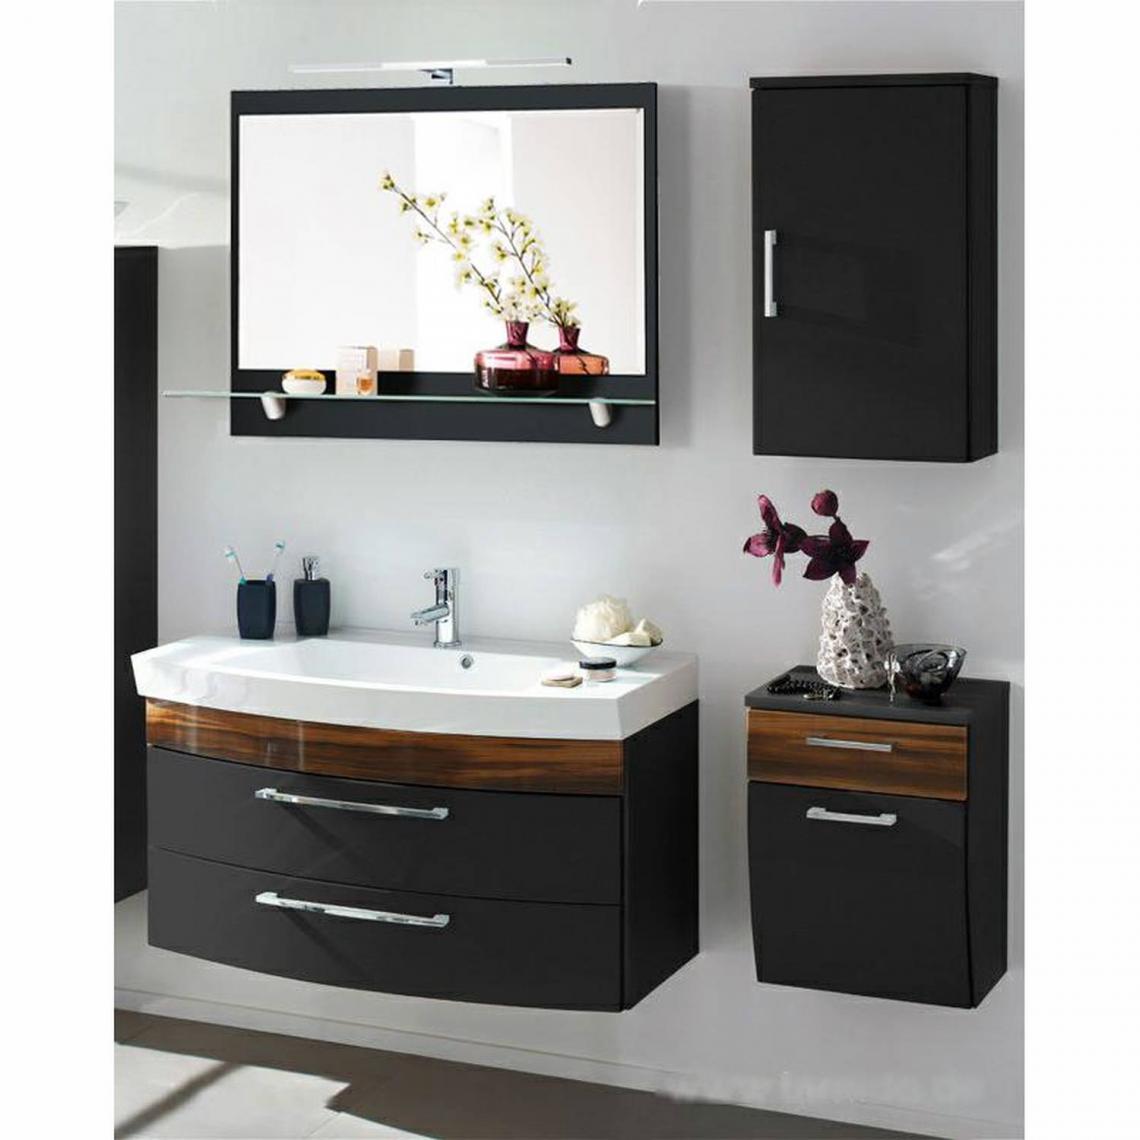 En.Casa - Ensemble de meubles de salle de bains anthracite brillant, noyer noyer, miroir, x H x P environ : 220 x 200 x 57 cm - Meubles de salle de bain